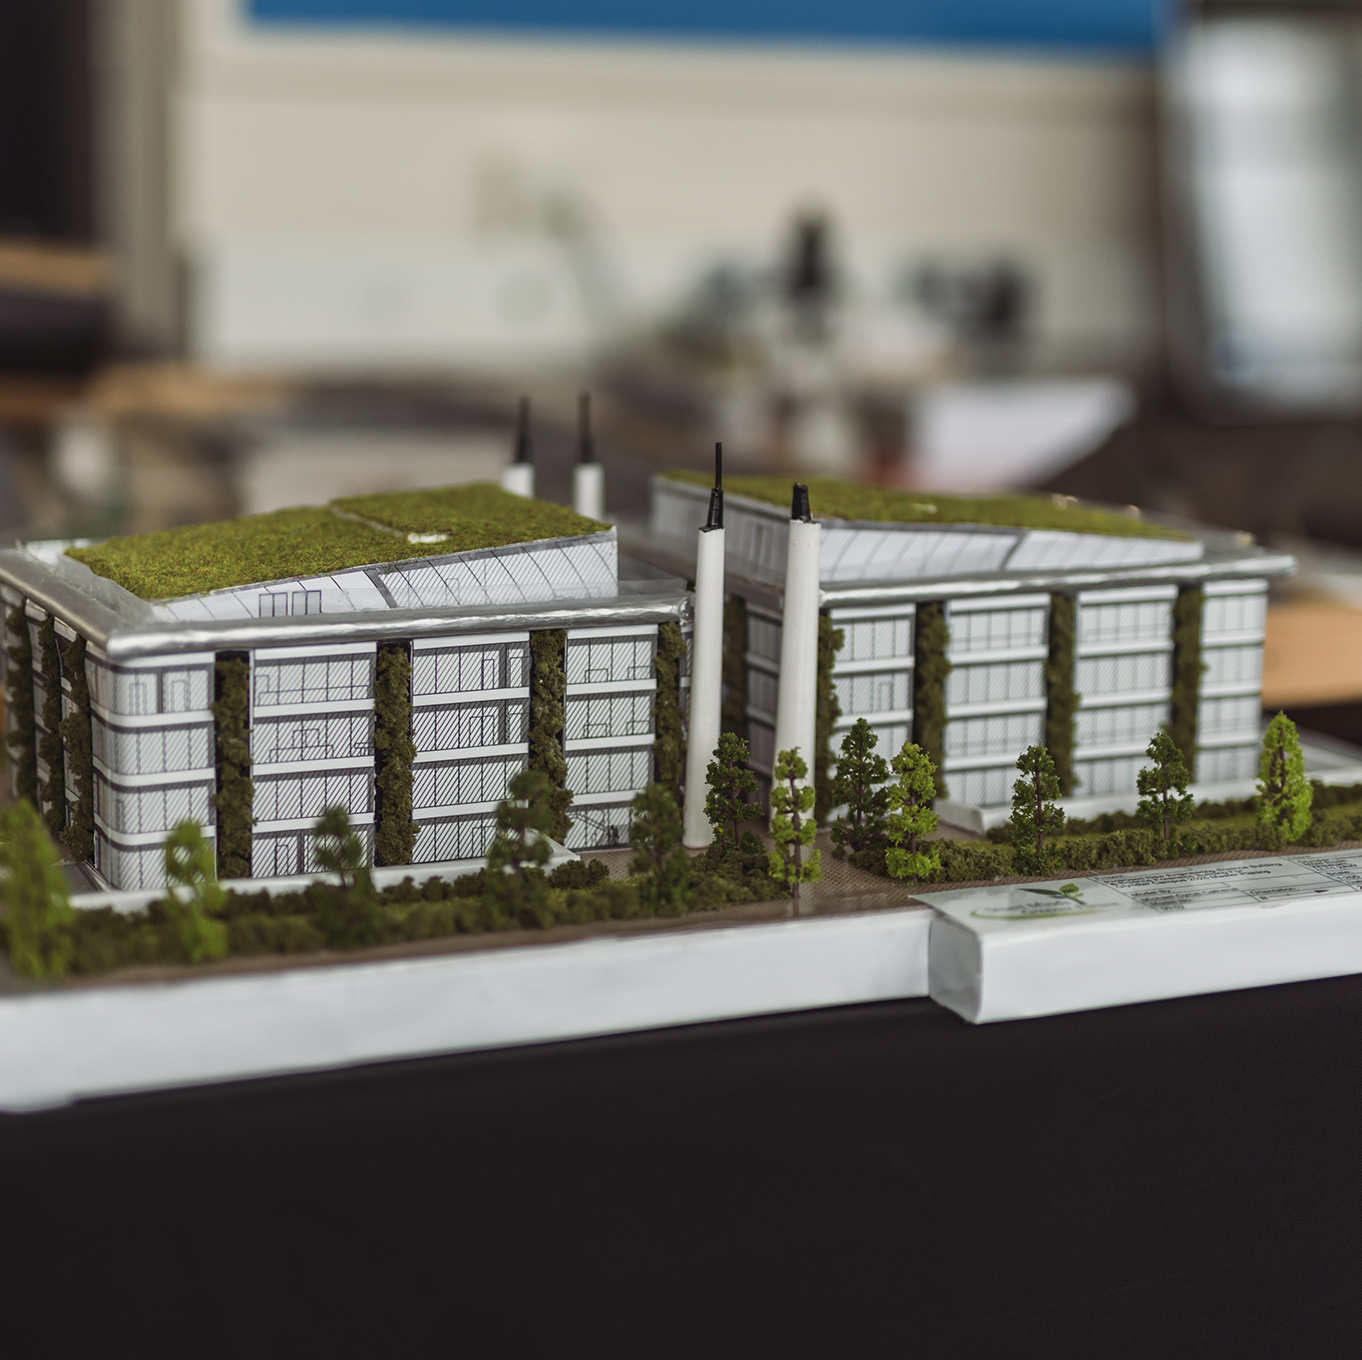 A 3D model of a building in a built environment class